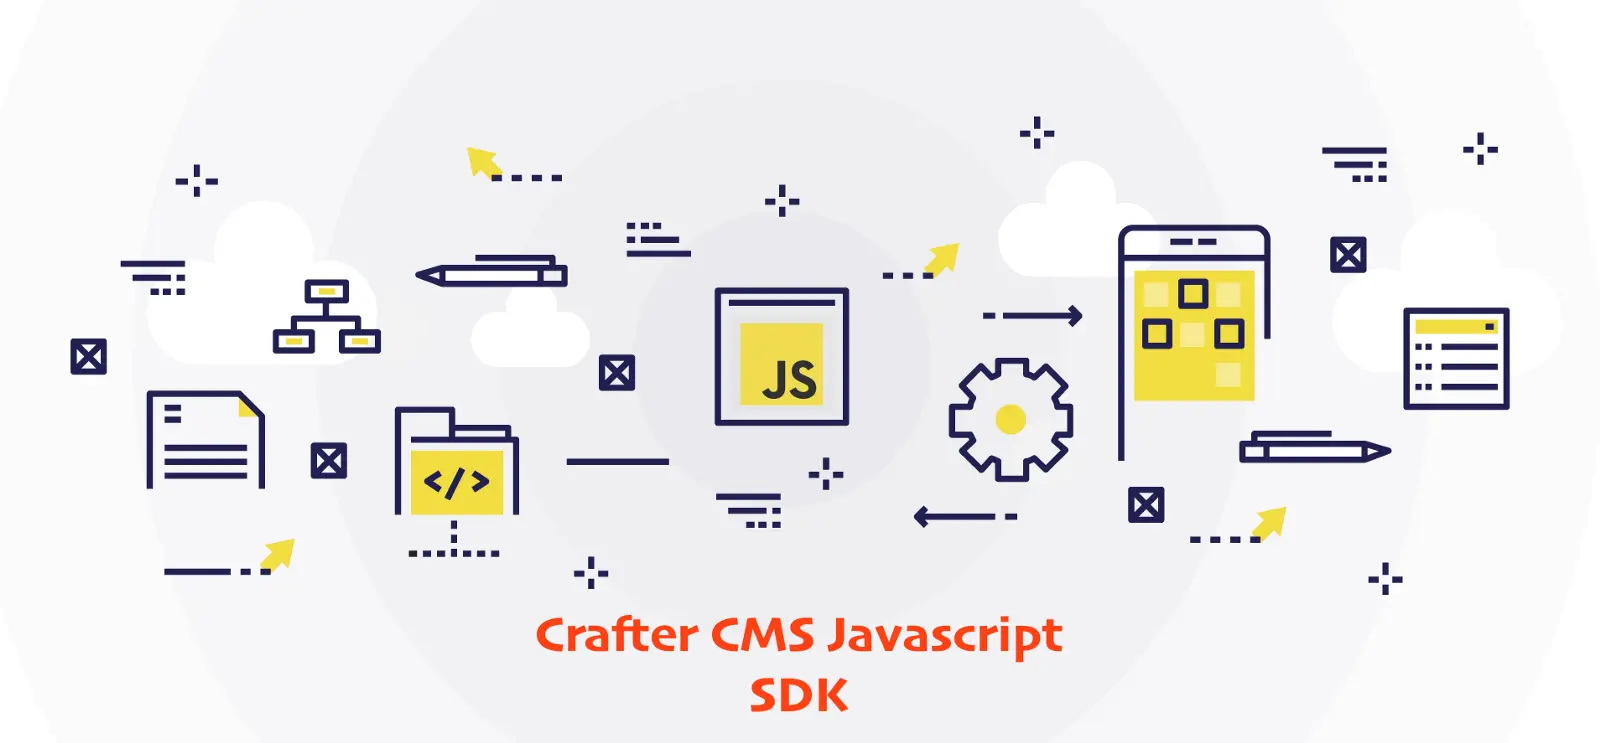 Introducing CrafterCMS Javascript SDK